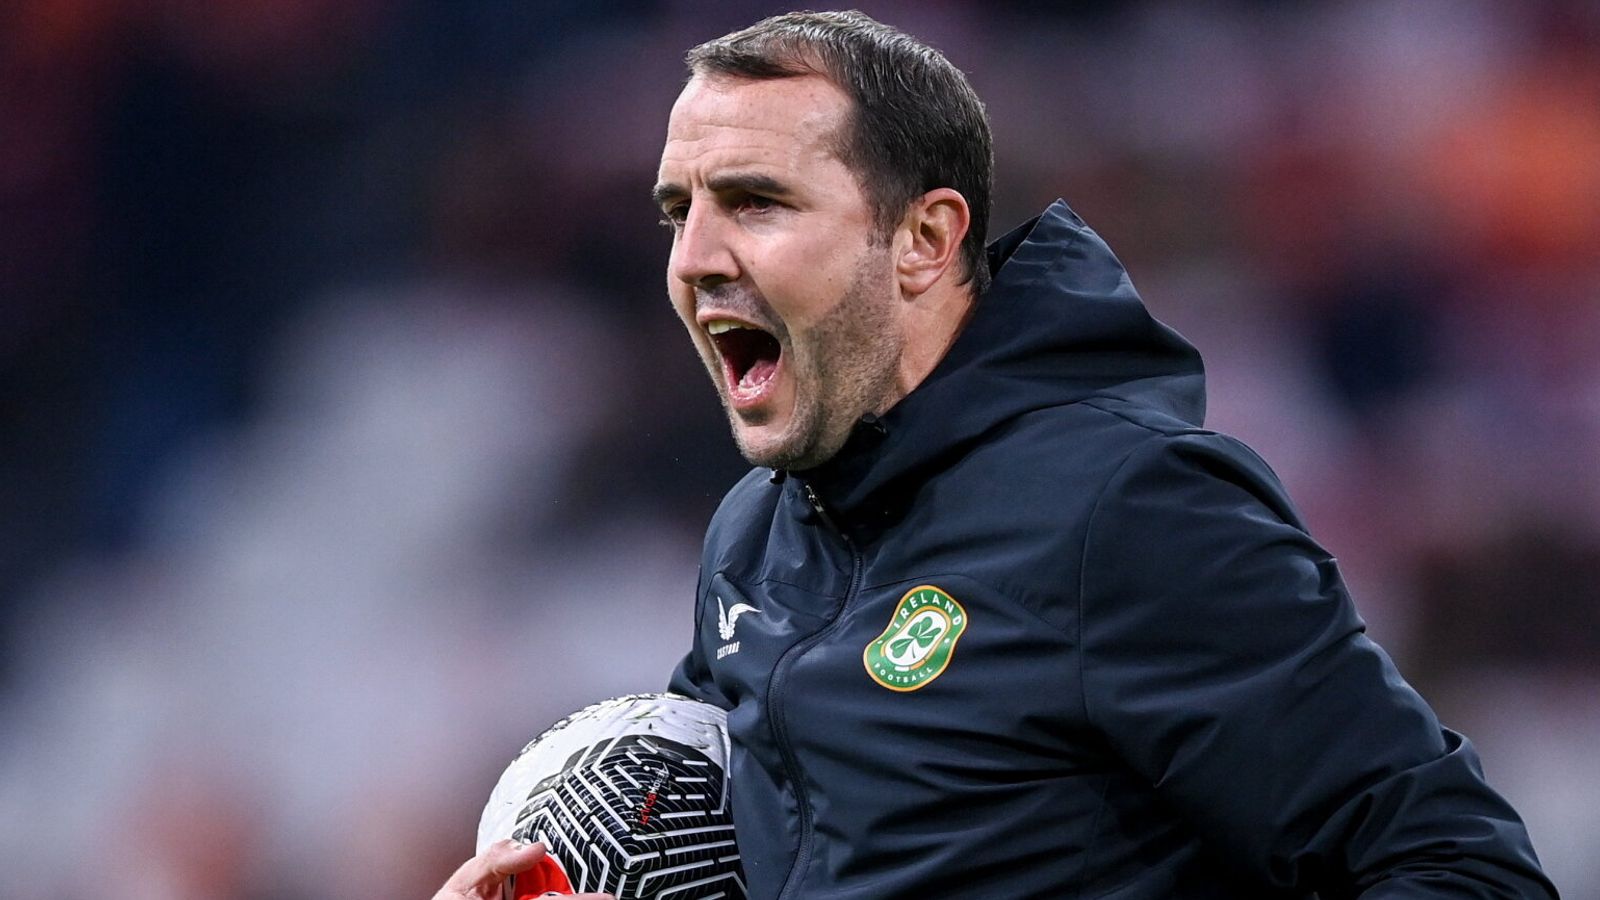 O'Shea appointed interim head coach of Ireland